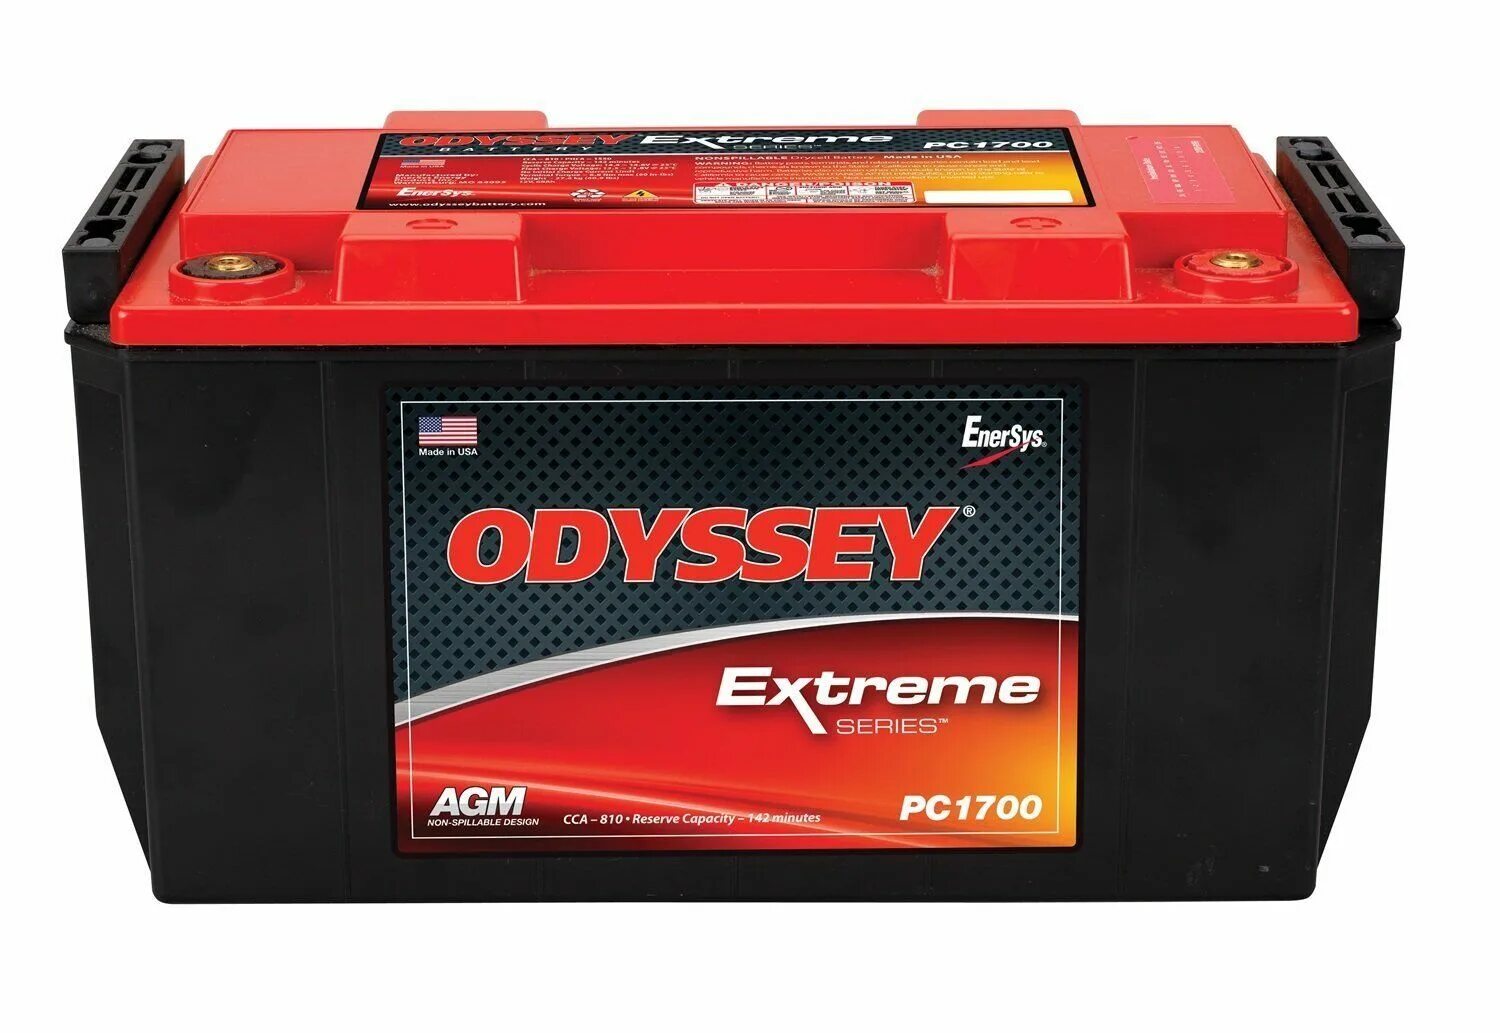 Батарея аккумуляторная pc680 17ah Odyssey ENERSYS. Odyssey pc950 аккумуляторы. Одиссей 110 AGM. Odyssey extreme PC 1200. Battery pc